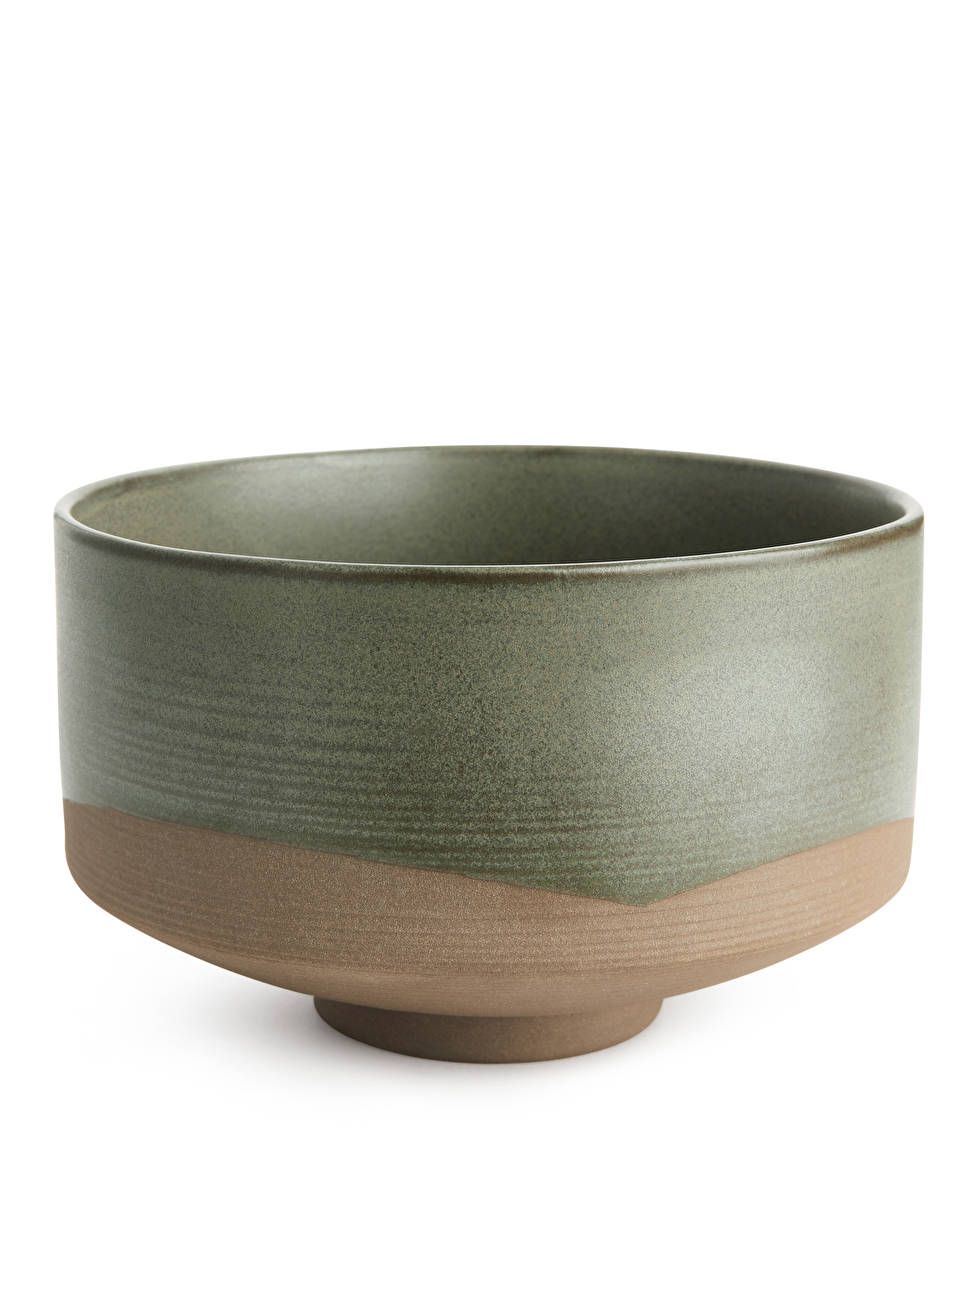 Serax Merci Bowl No. 1, 15 cm | ARKET